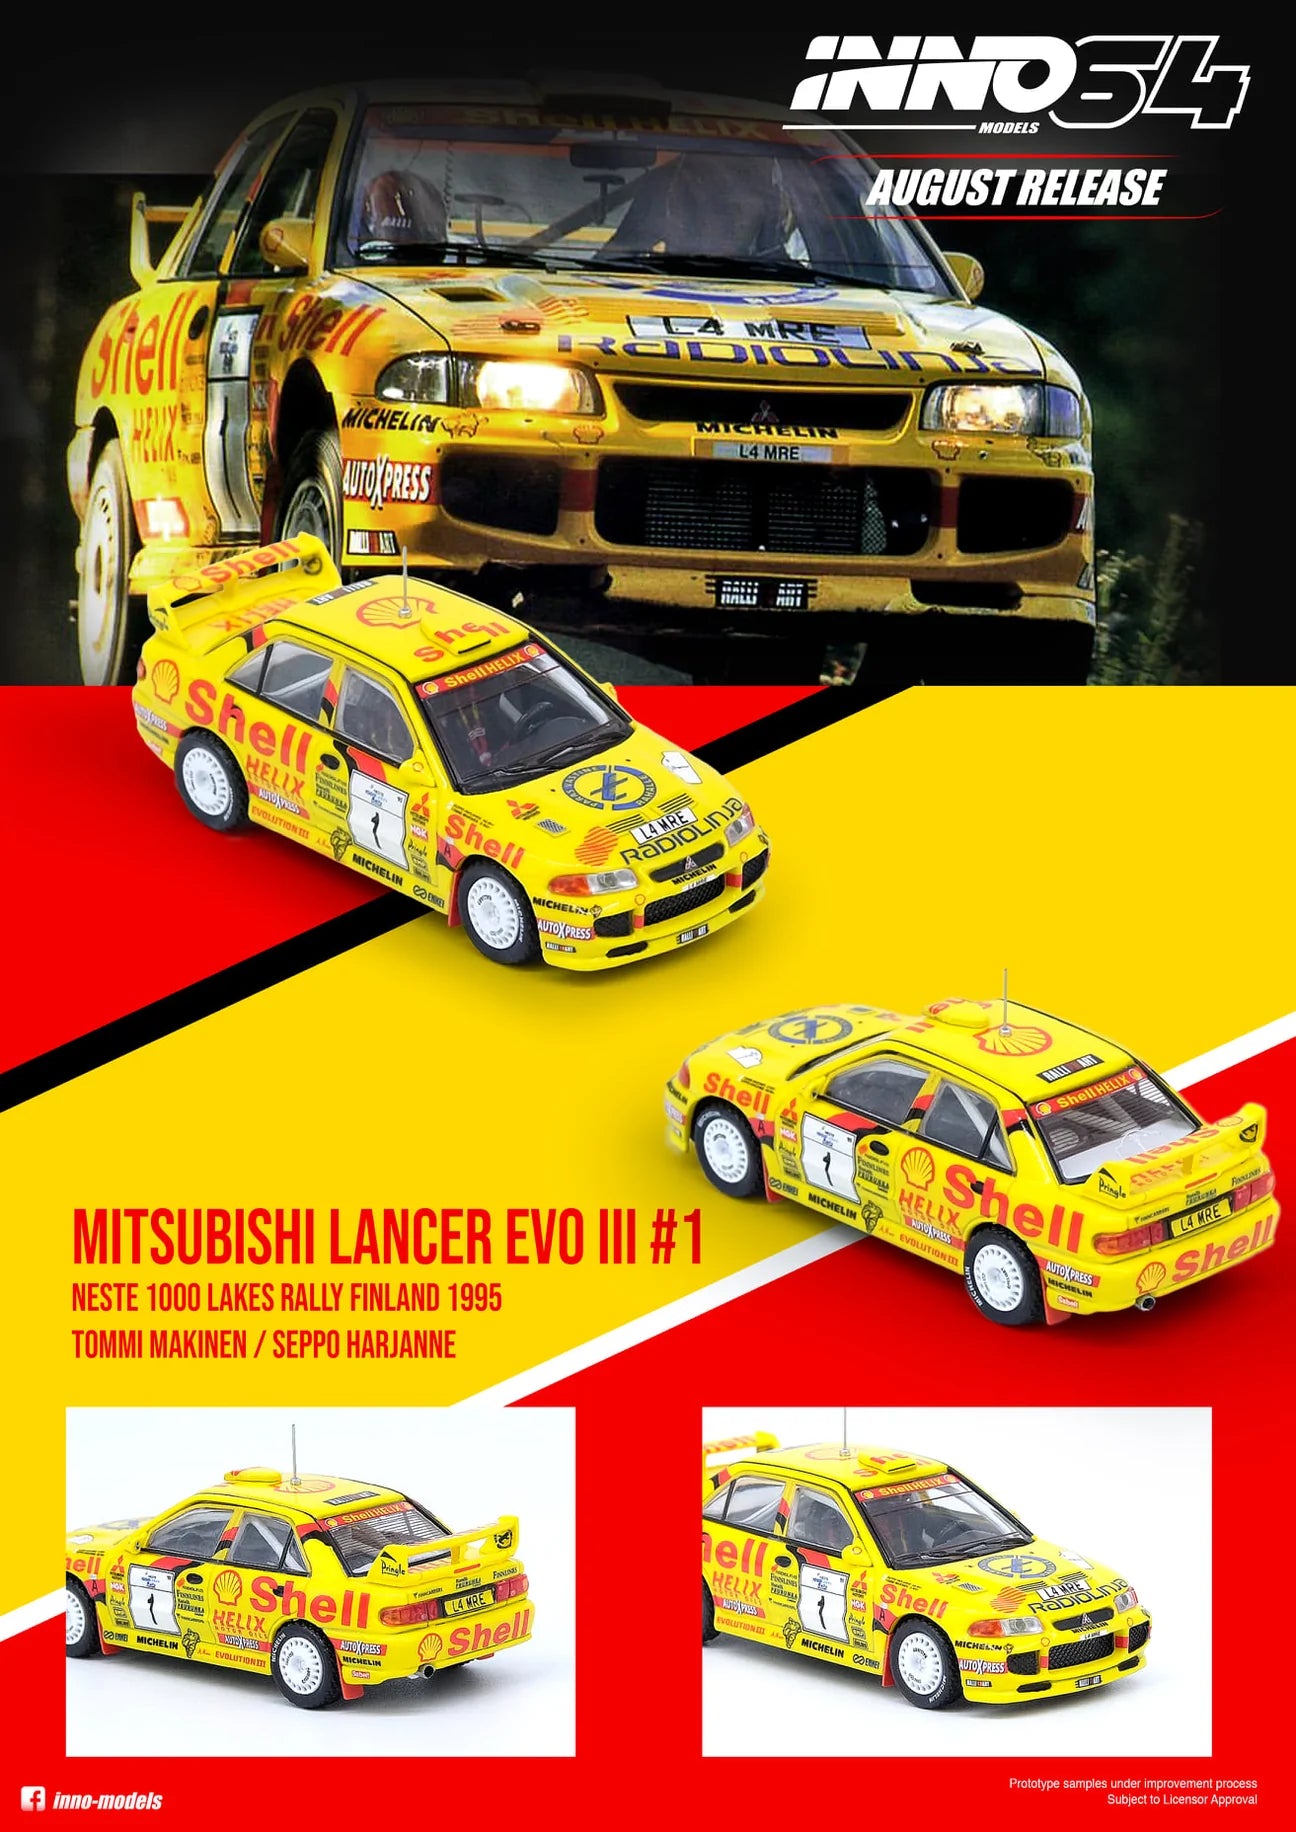 Inno64 1:64 Mitsubishi Lancer Evolution III #1 "Ralliart Shell" Neste 1000 Lakes Rally Finland 1995 Tommi Makinen / Seppo Harjanne